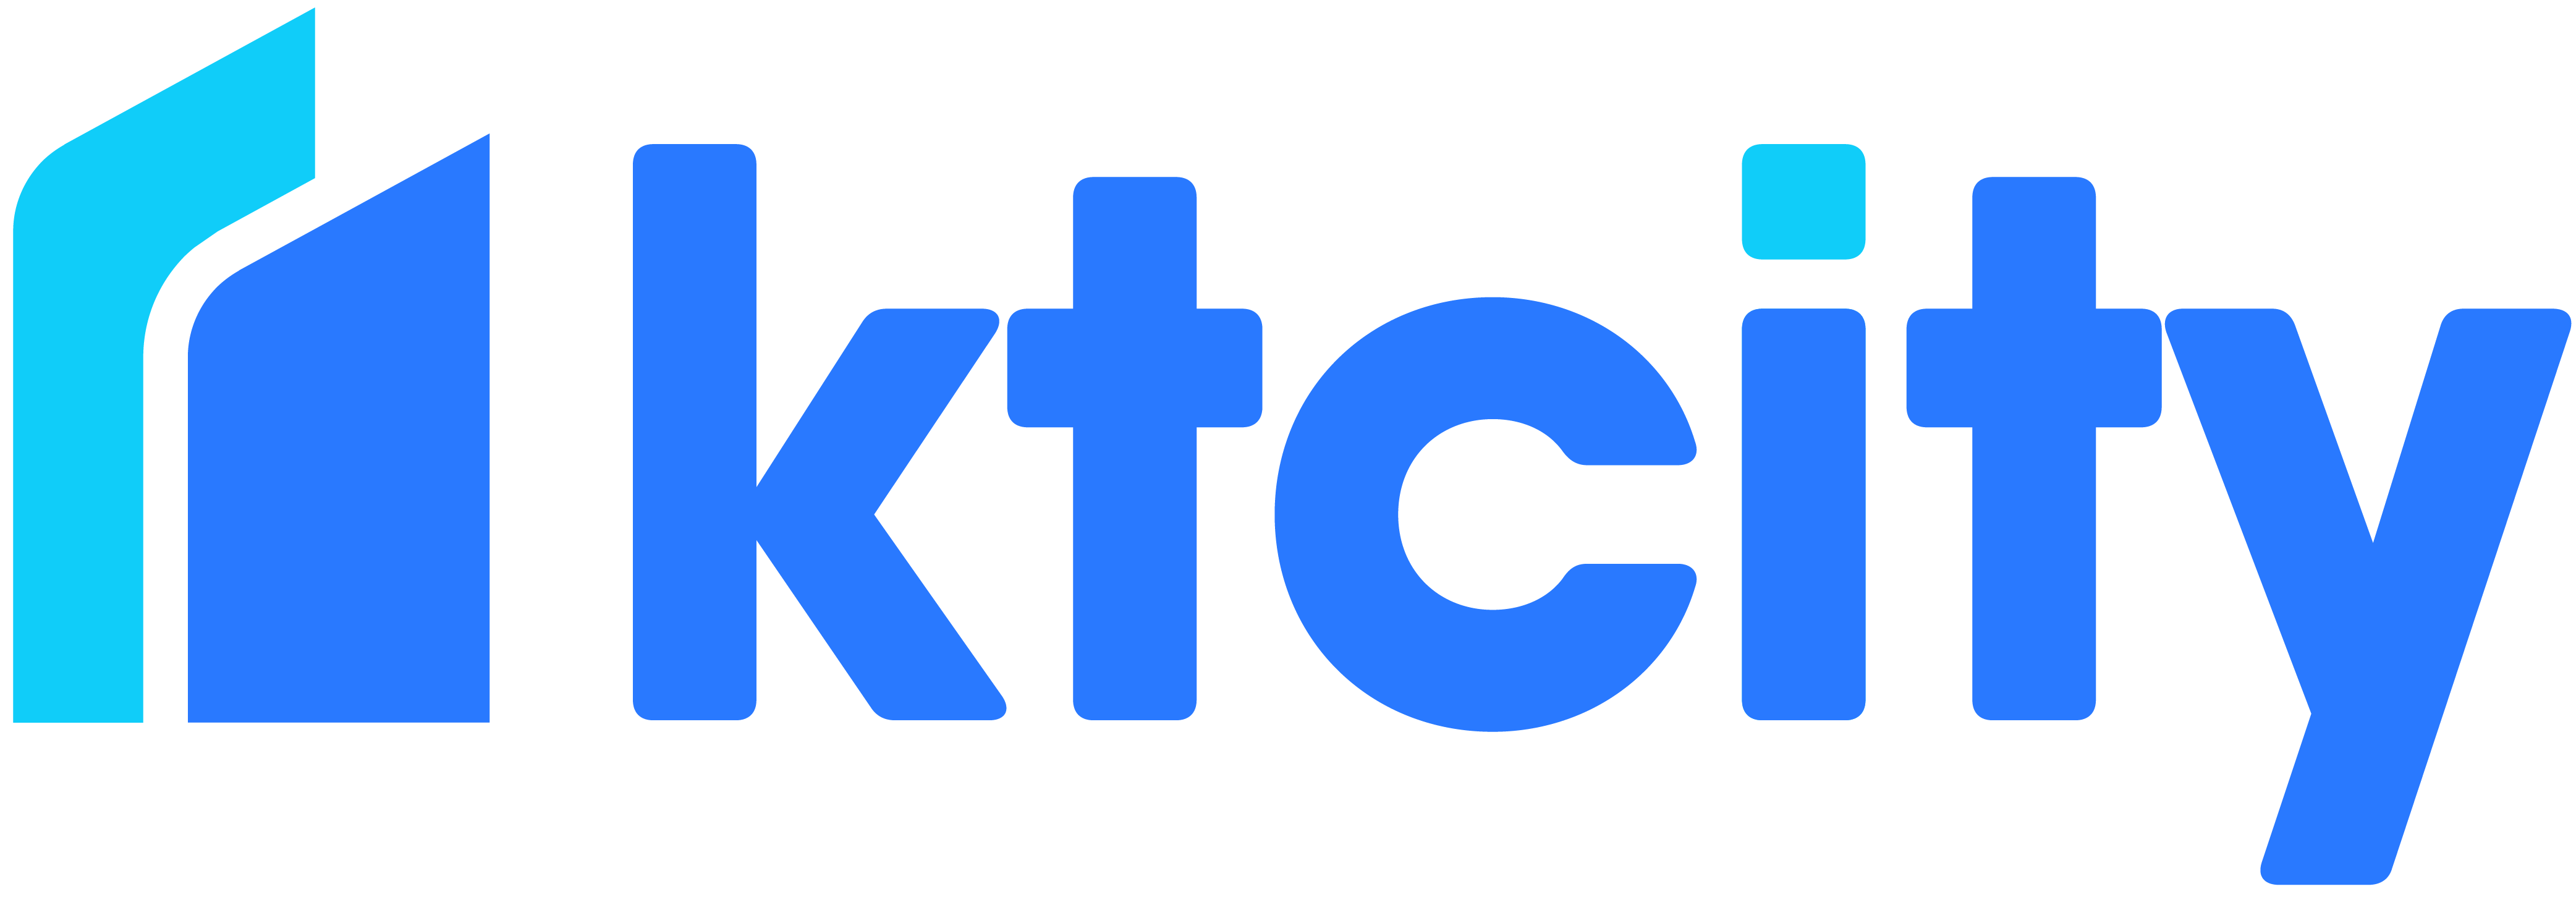 KTcity